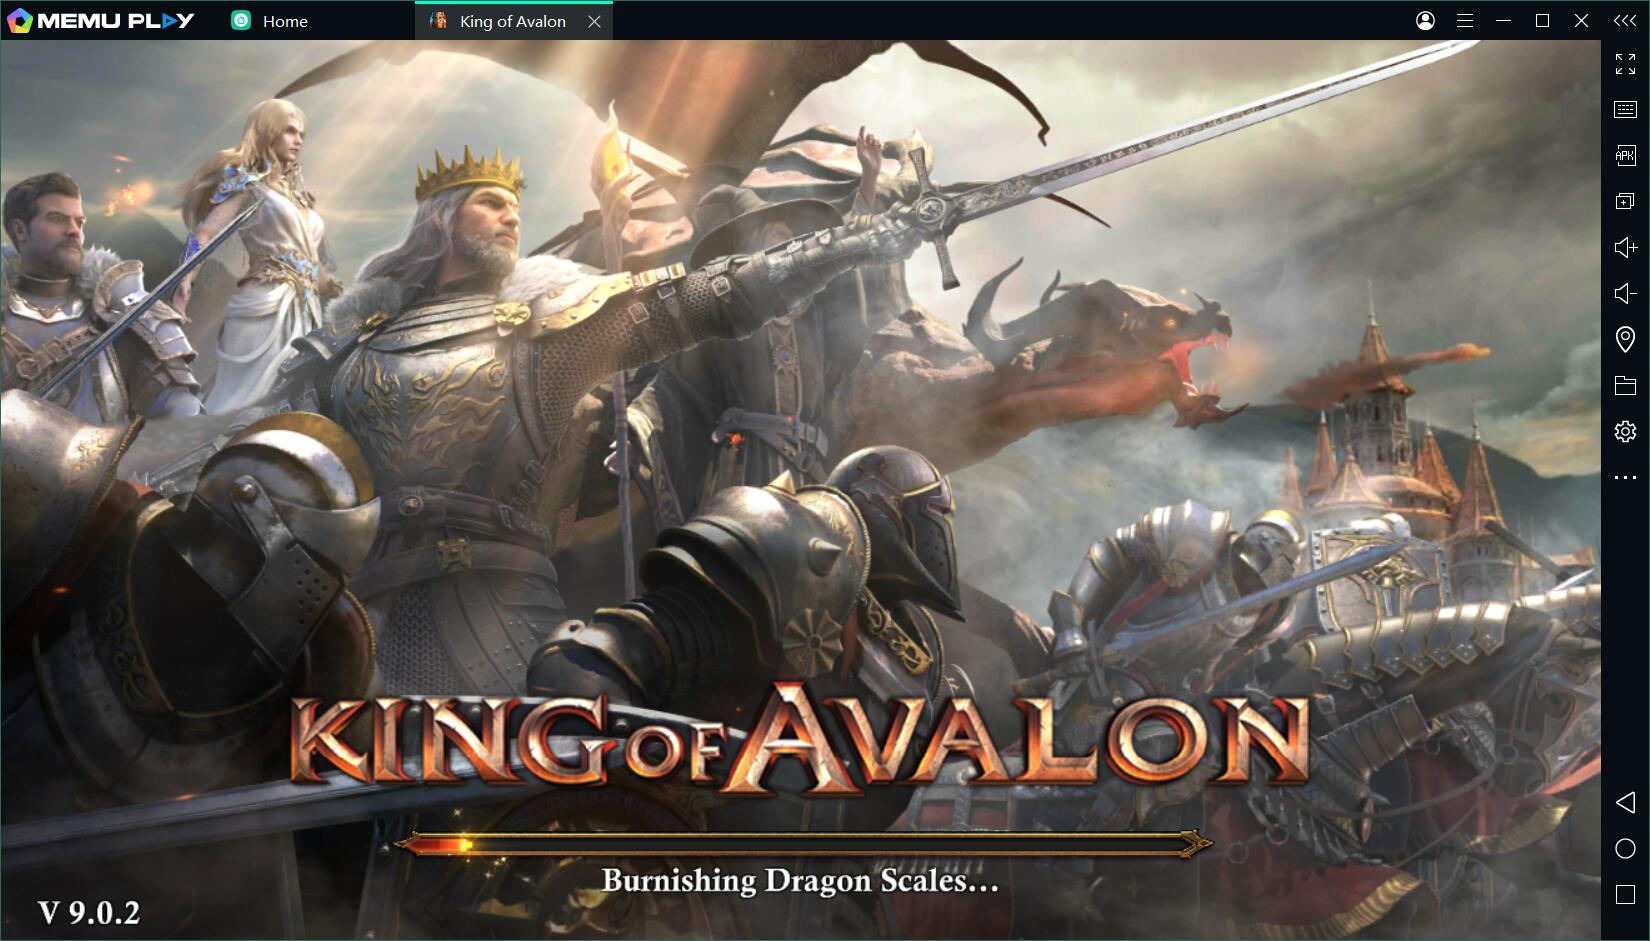 Download & Play King Of Swords Mobile on PC & Mac (Emulator)